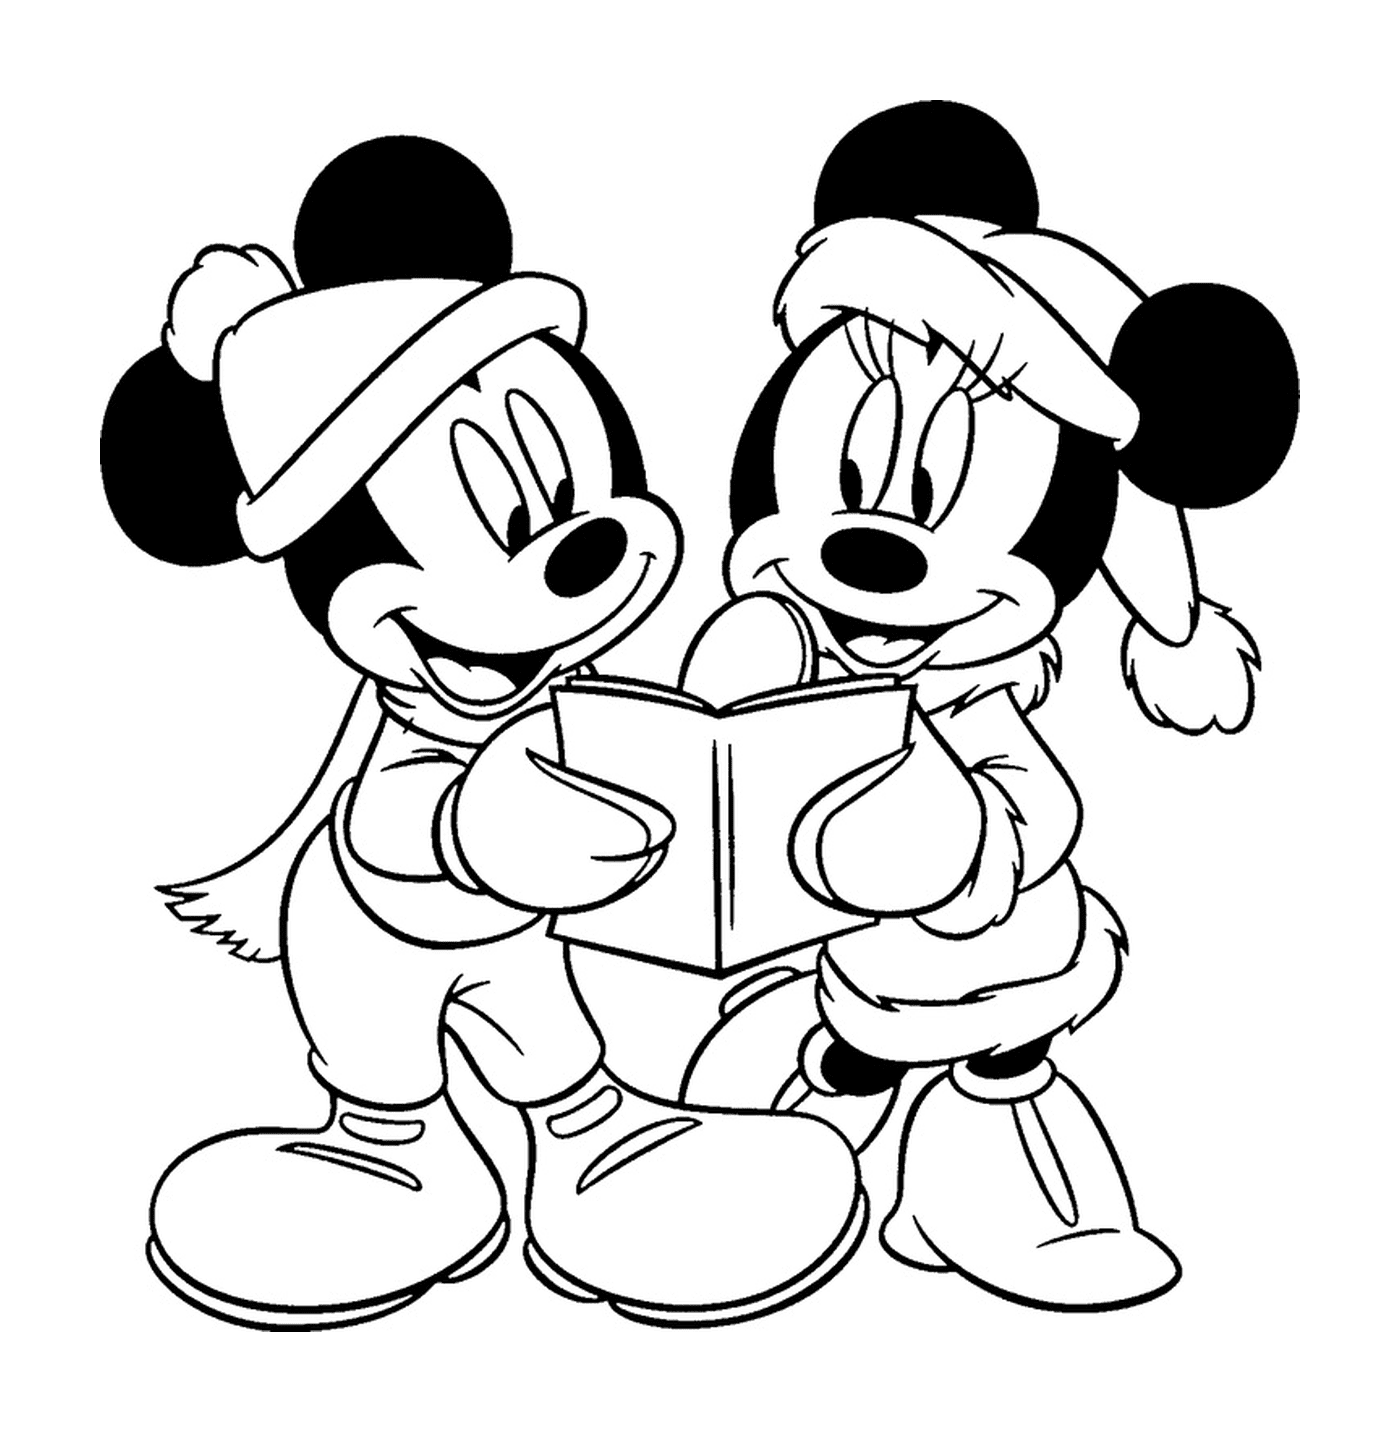   Mickey et Minnie lisent livre 